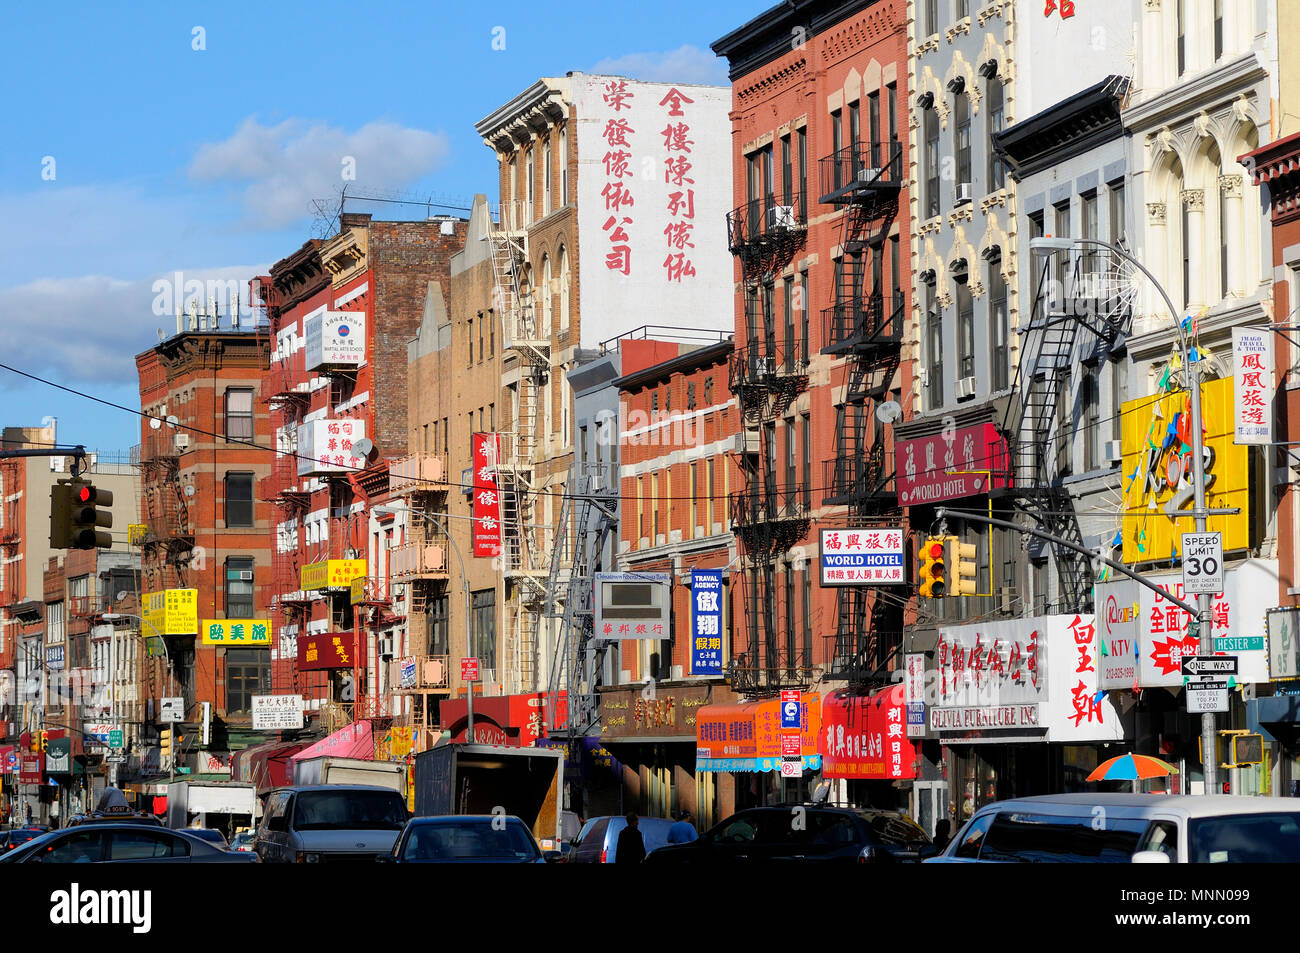 North America; American; East Coast; USA; New York; Manhattan, Chinatown, Lafayette Street; Stock Photo